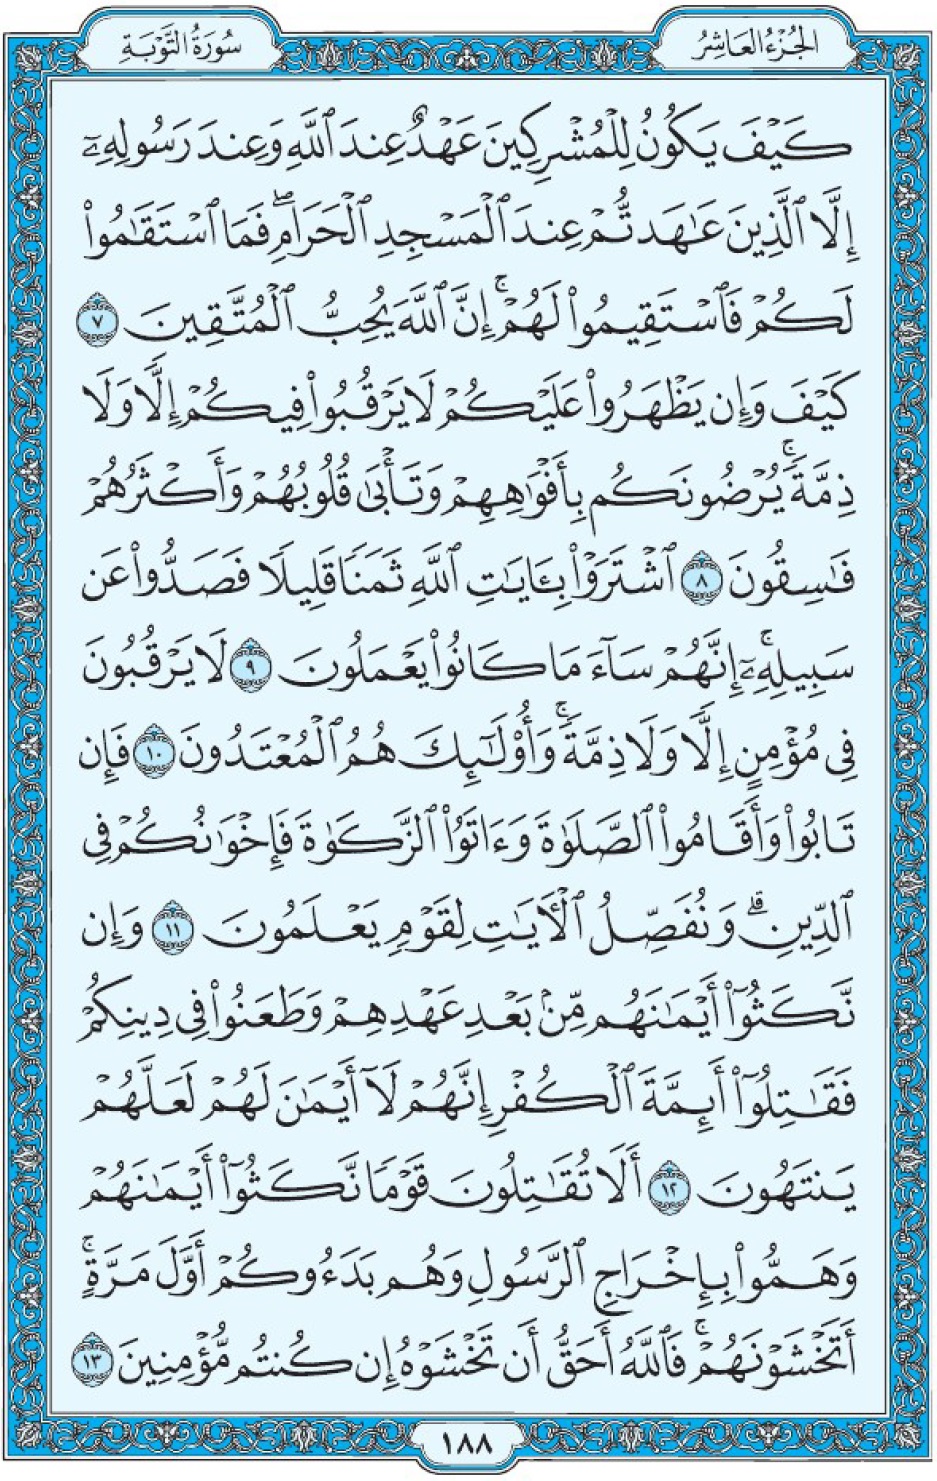 Коран Мединский мусхаф страница 188, Ат-Тауба, аят 7-13